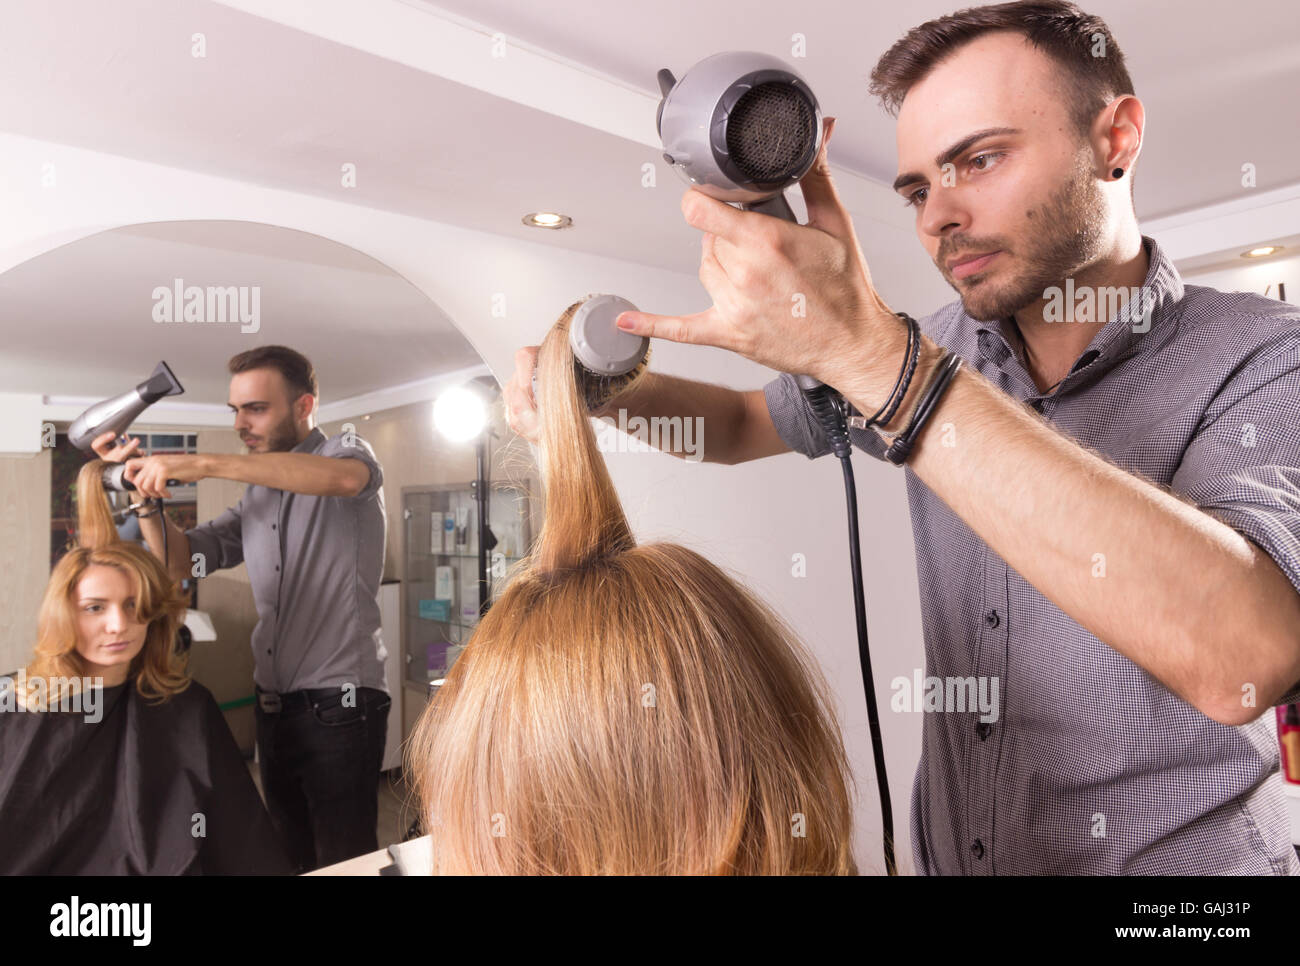 Mann Friseur Föhnen Kamm Walze Haar der Frau, Sicht nach hinten. Stockfoto